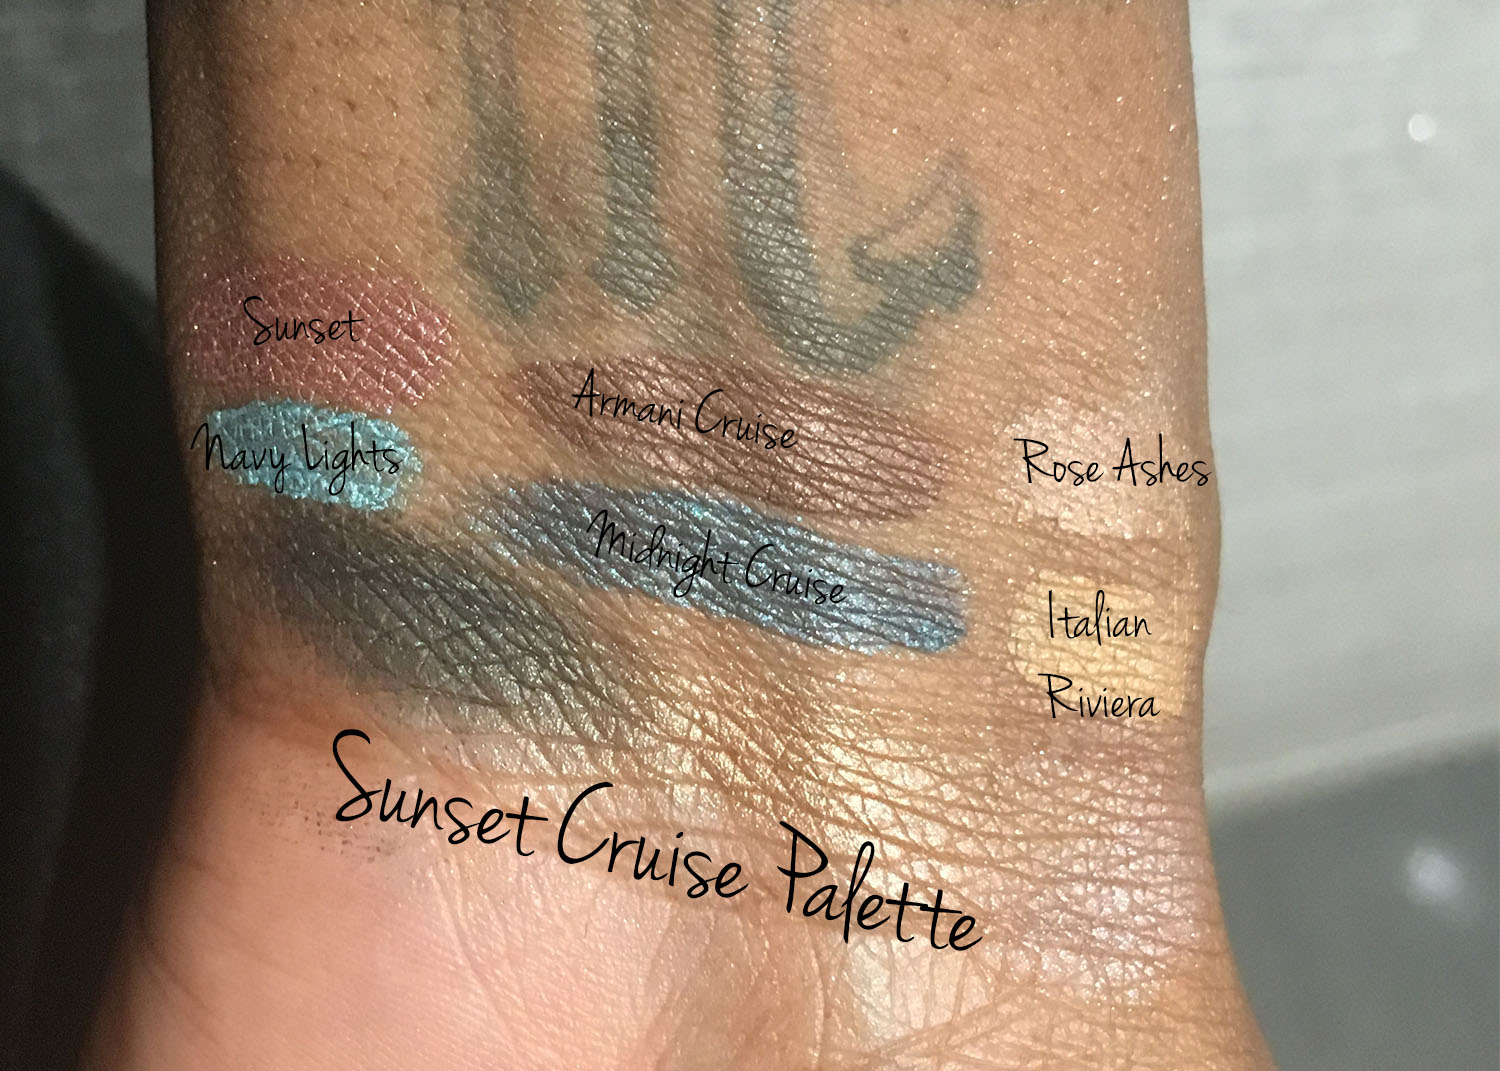 Armani Sunset Cruise Palette